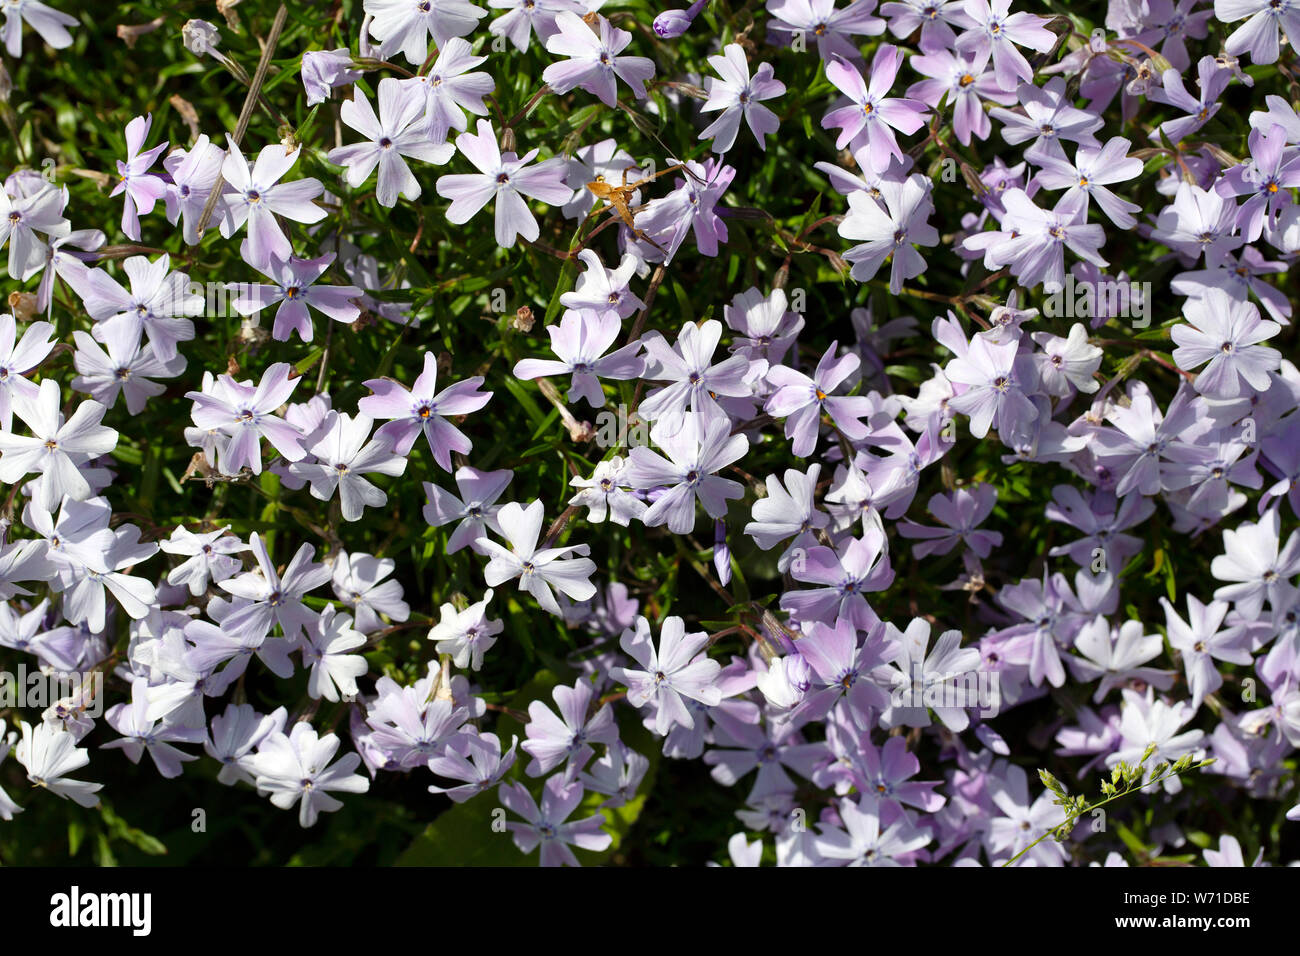 Flowering Annual Phlox (Phlox drummondii) Stock Photo